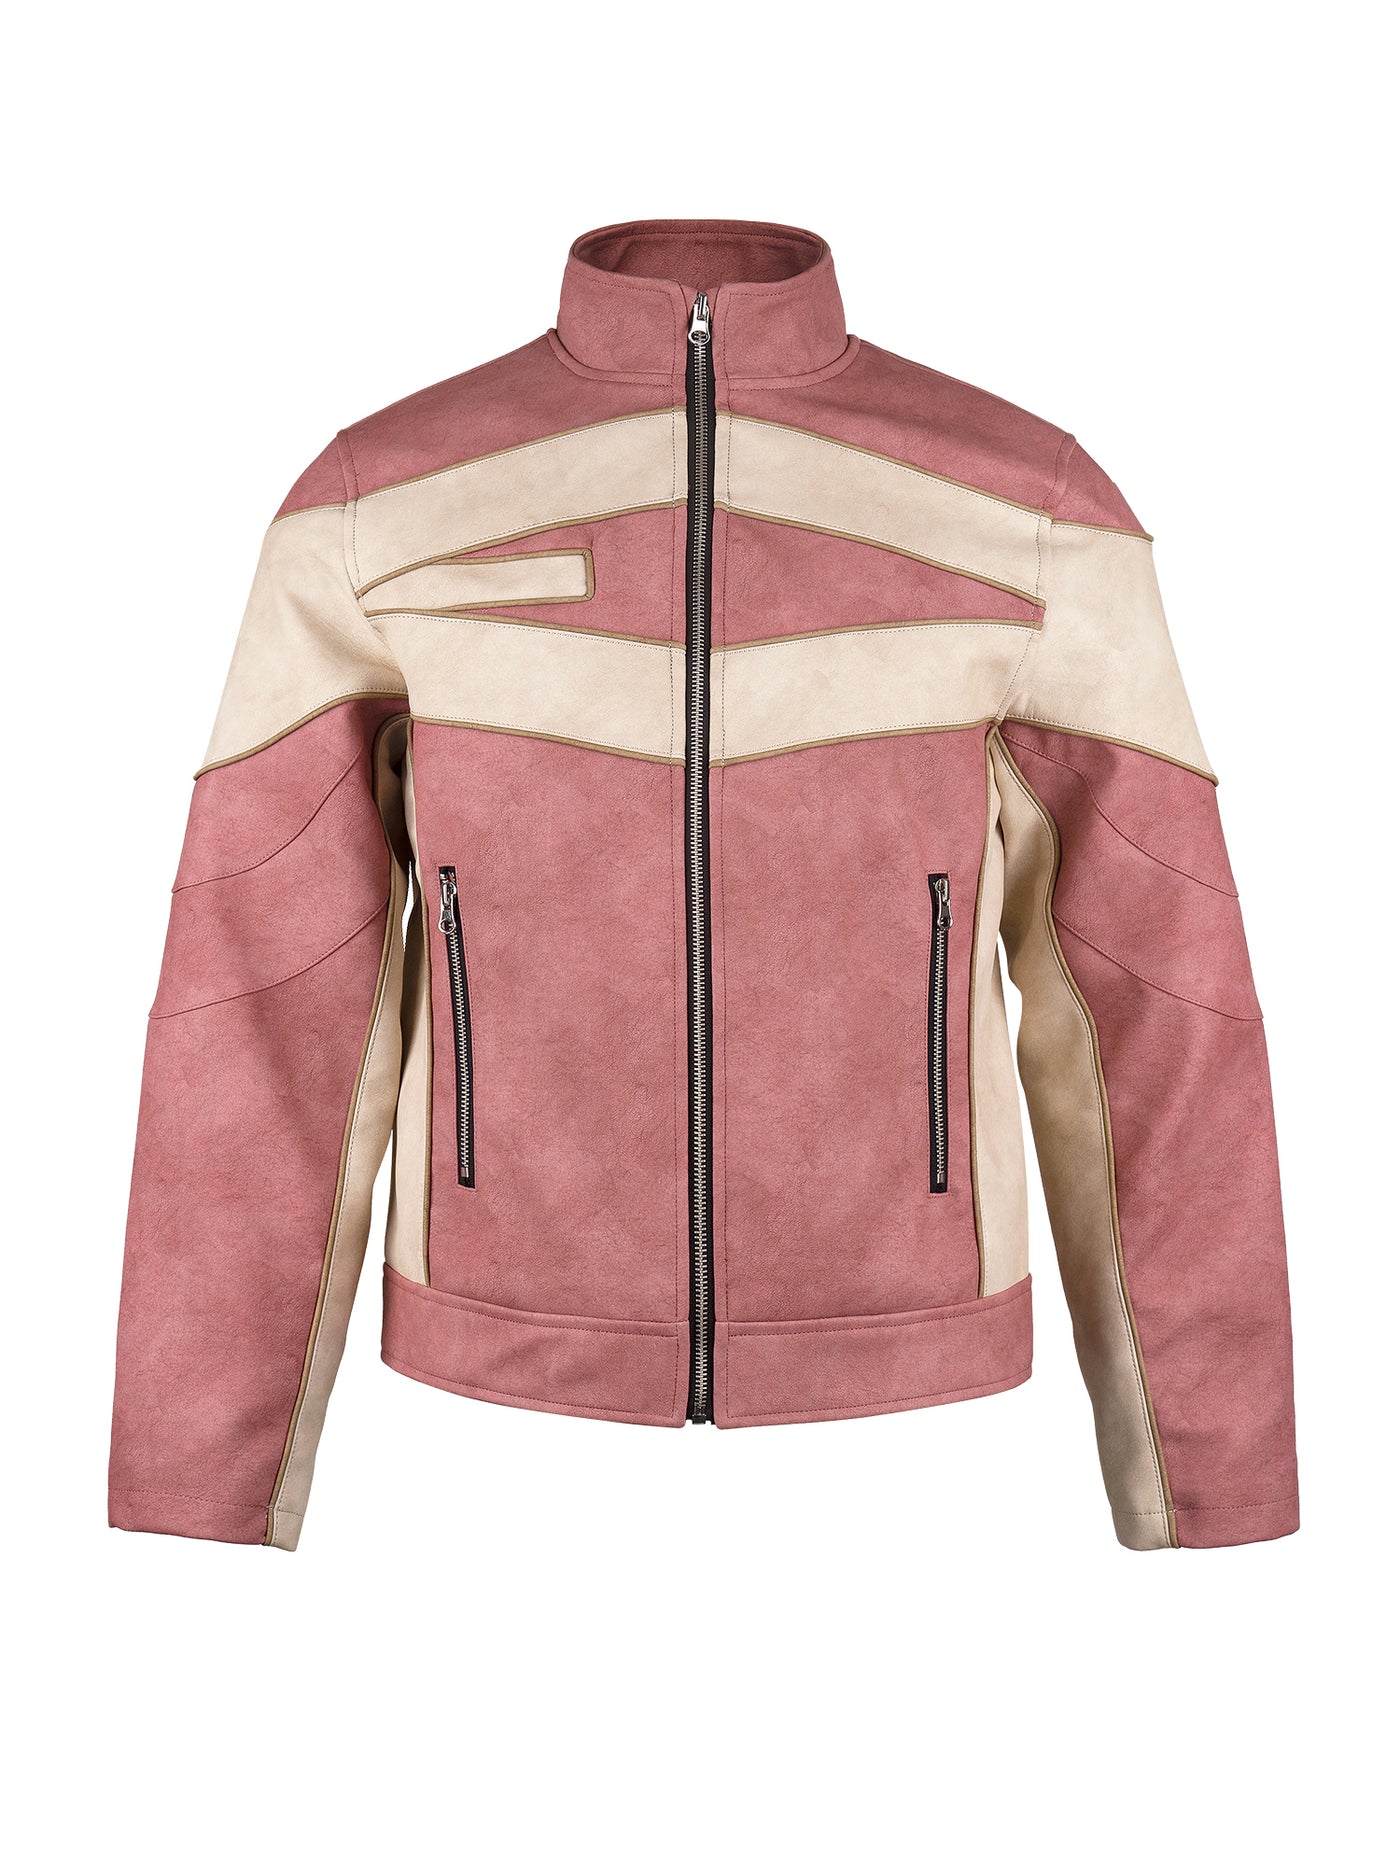 EVILKNIGHT(EK) Embroidery Biker Leather Jacket